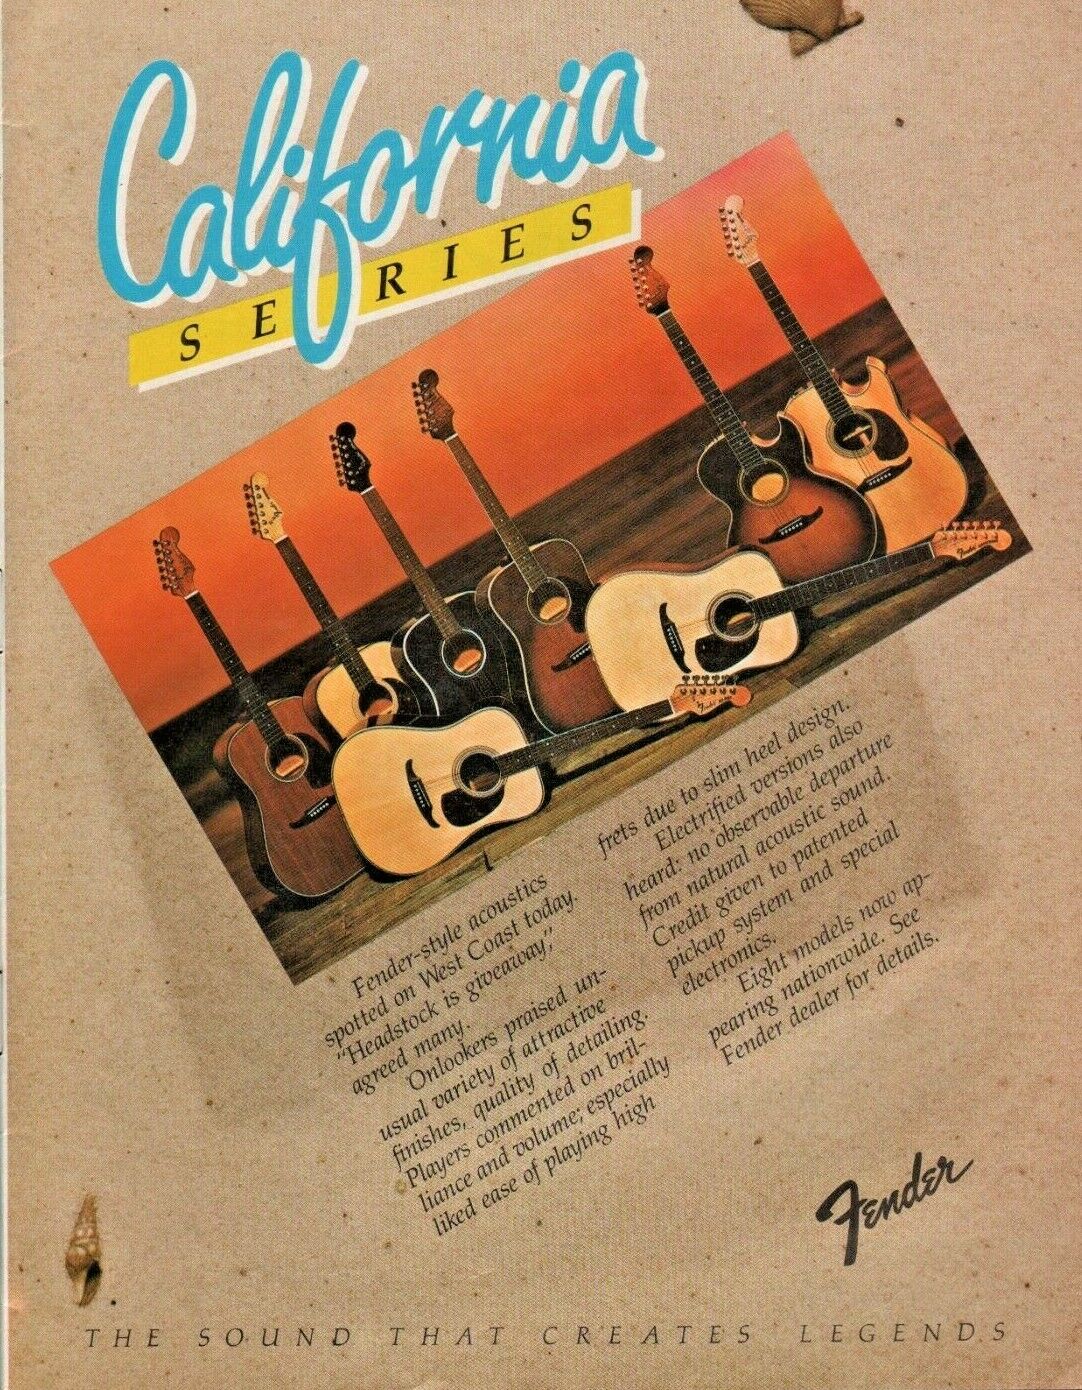 1983 Fender California Series Acoustic Guitars - Vintage Ad